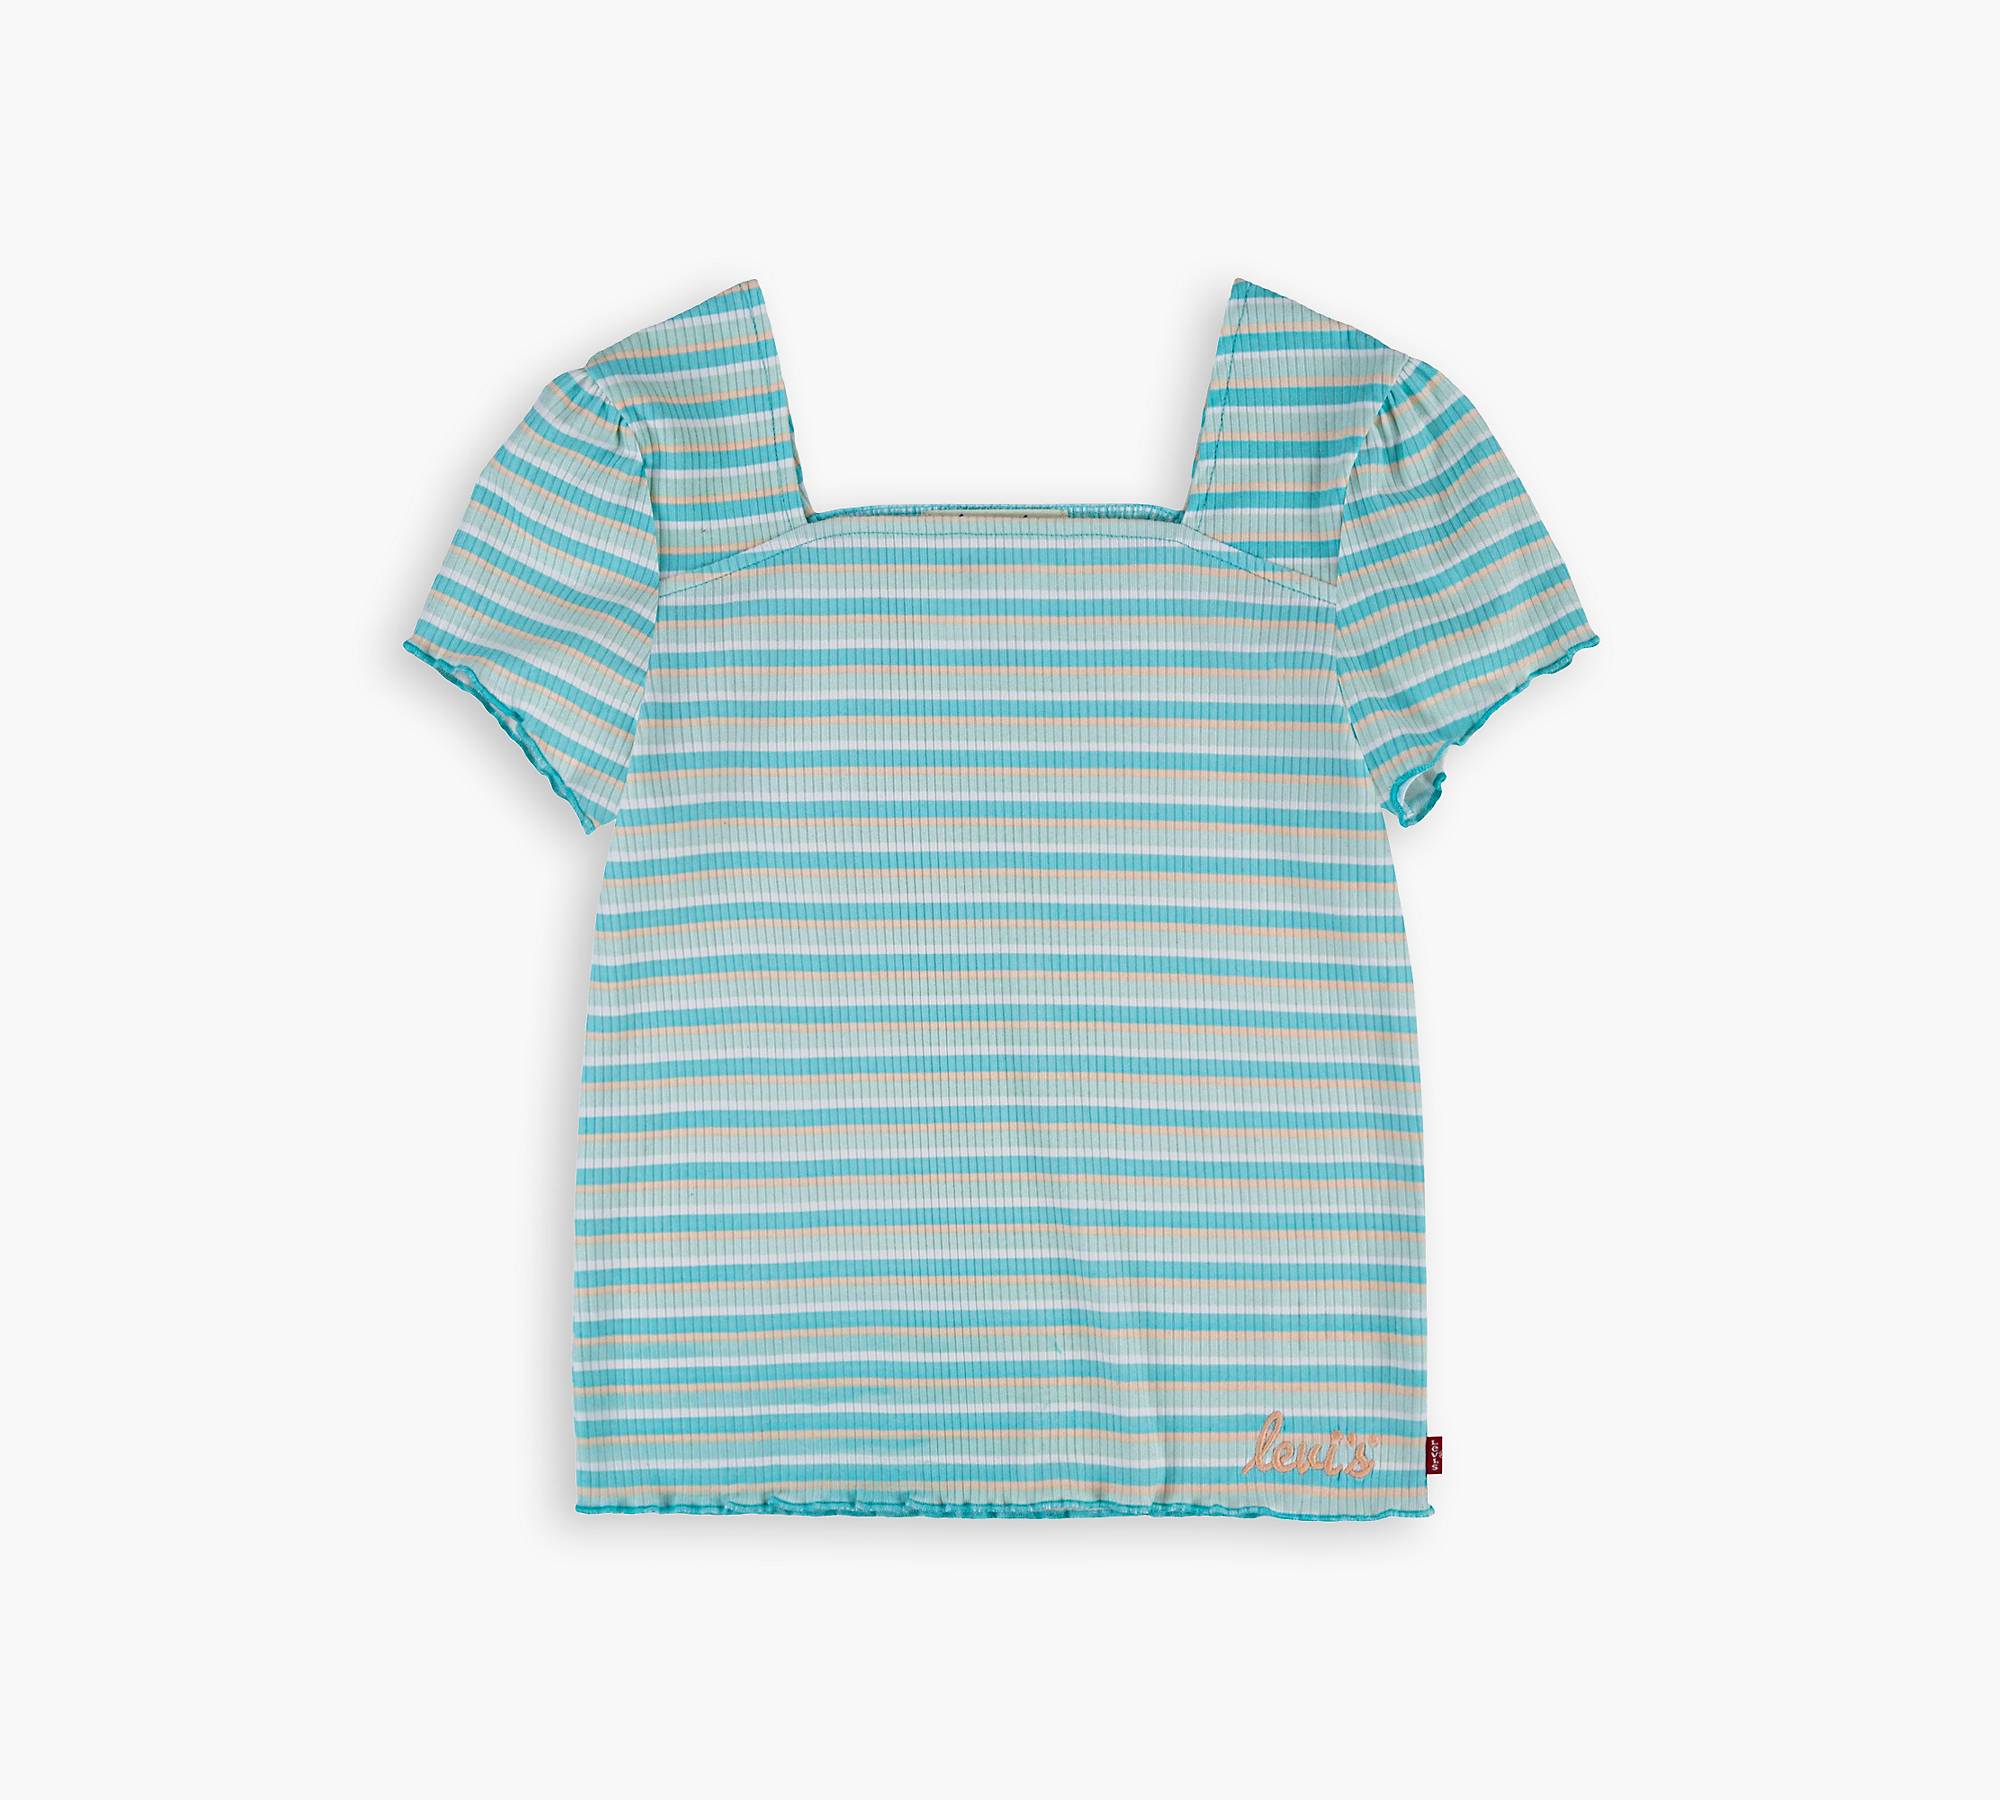 Ribbed Baby T-Shirt Little Girls 4-6x 1